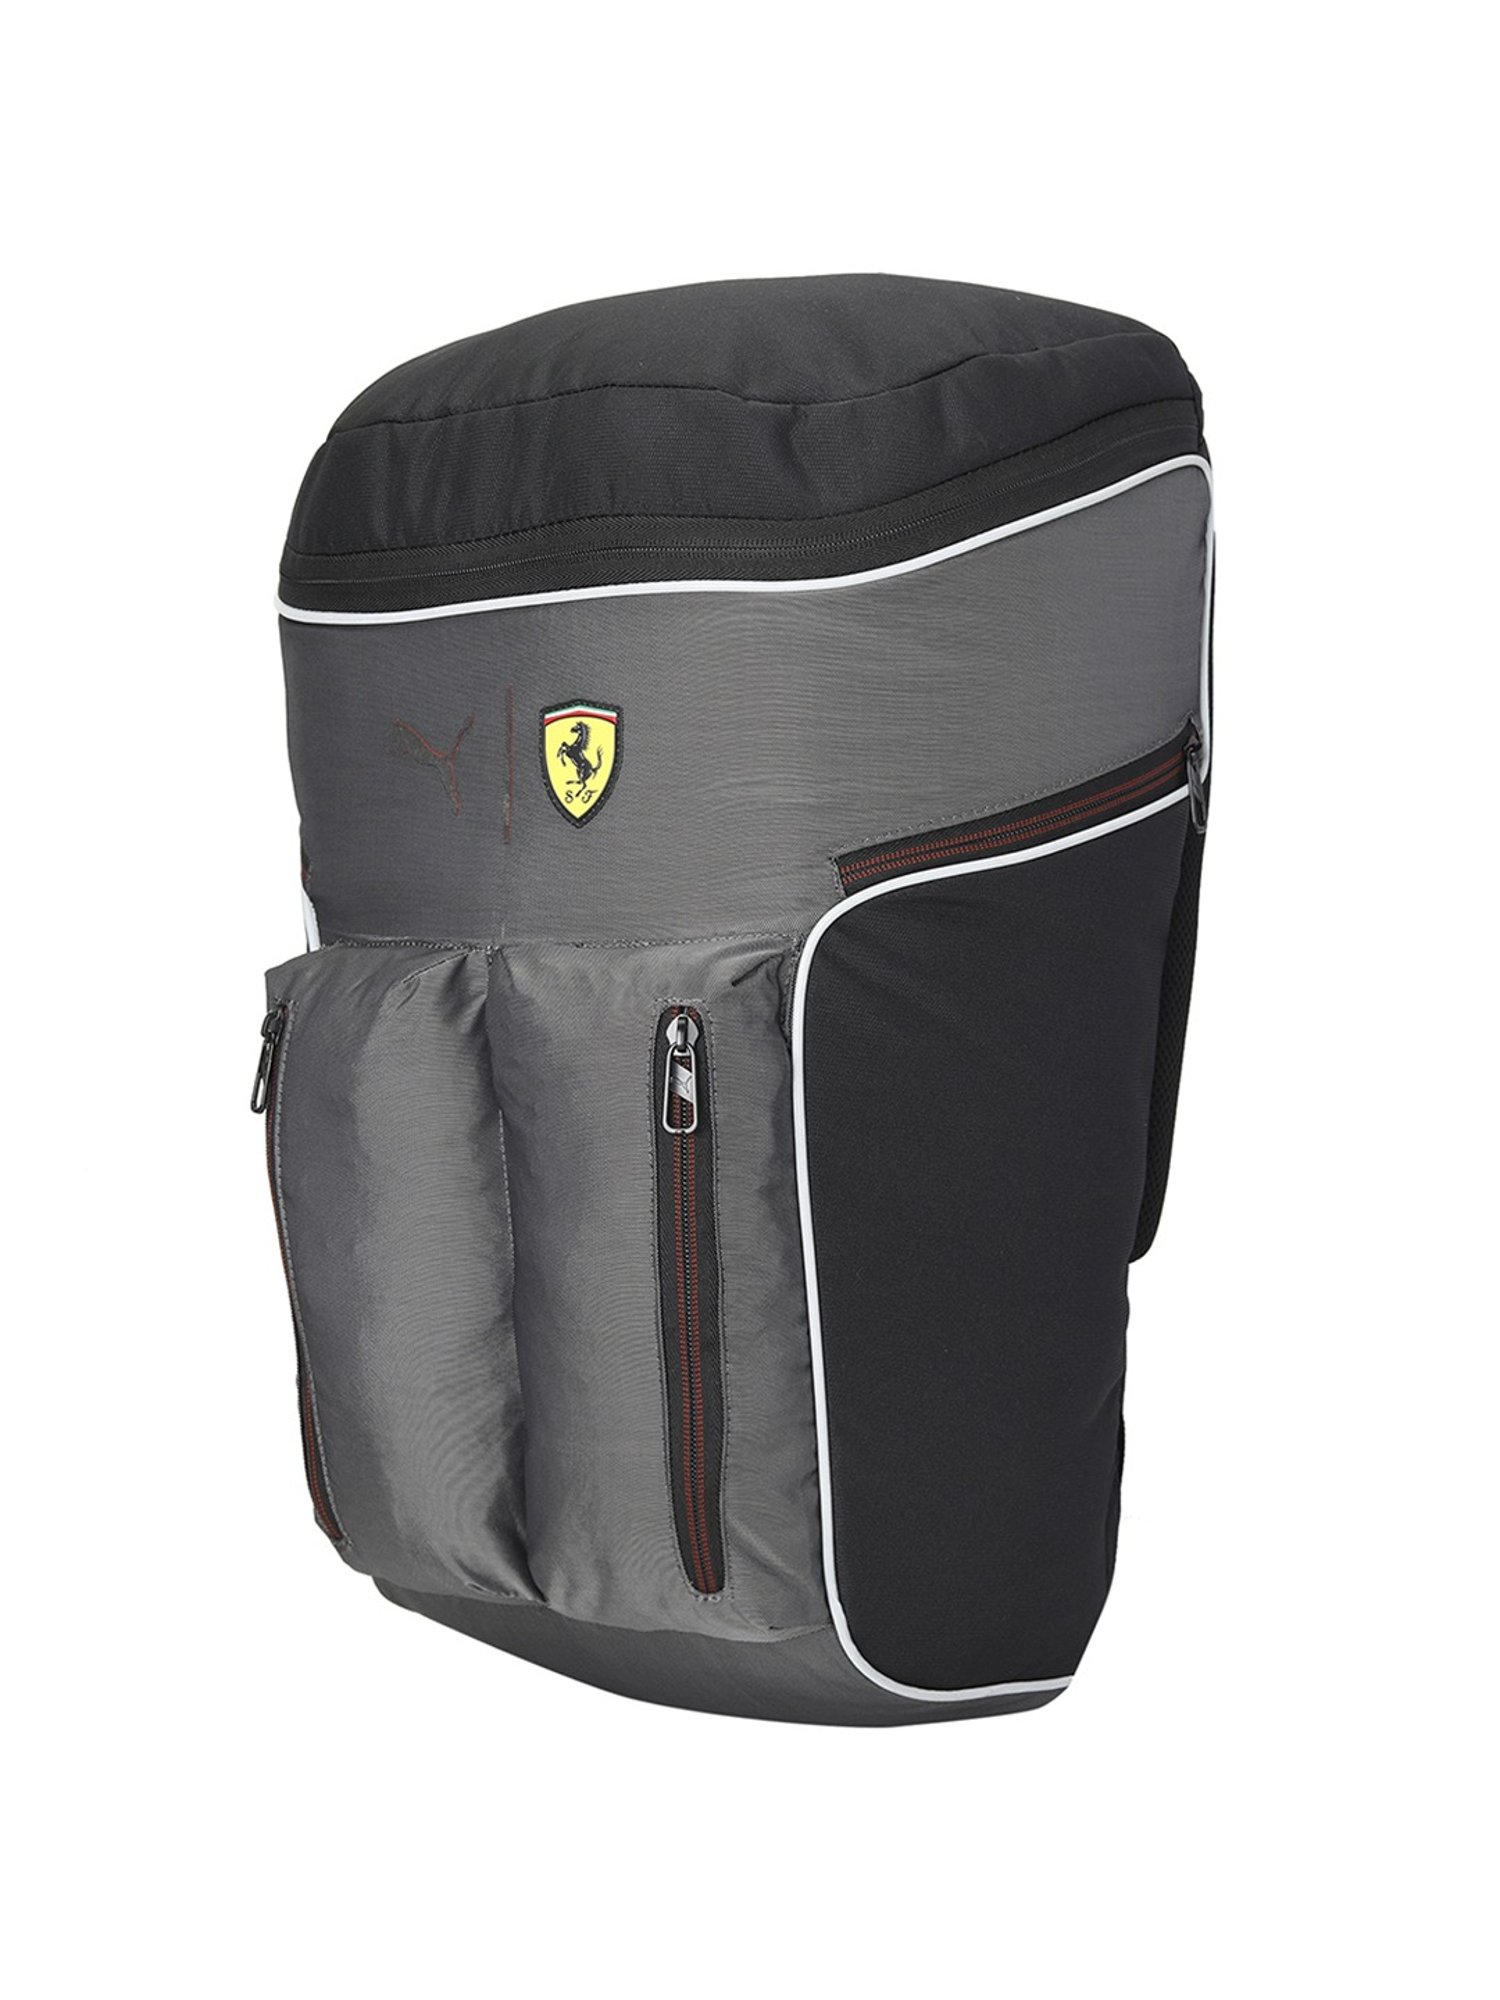 Ferrari Luggage for Sale | Ferrari Life Forum